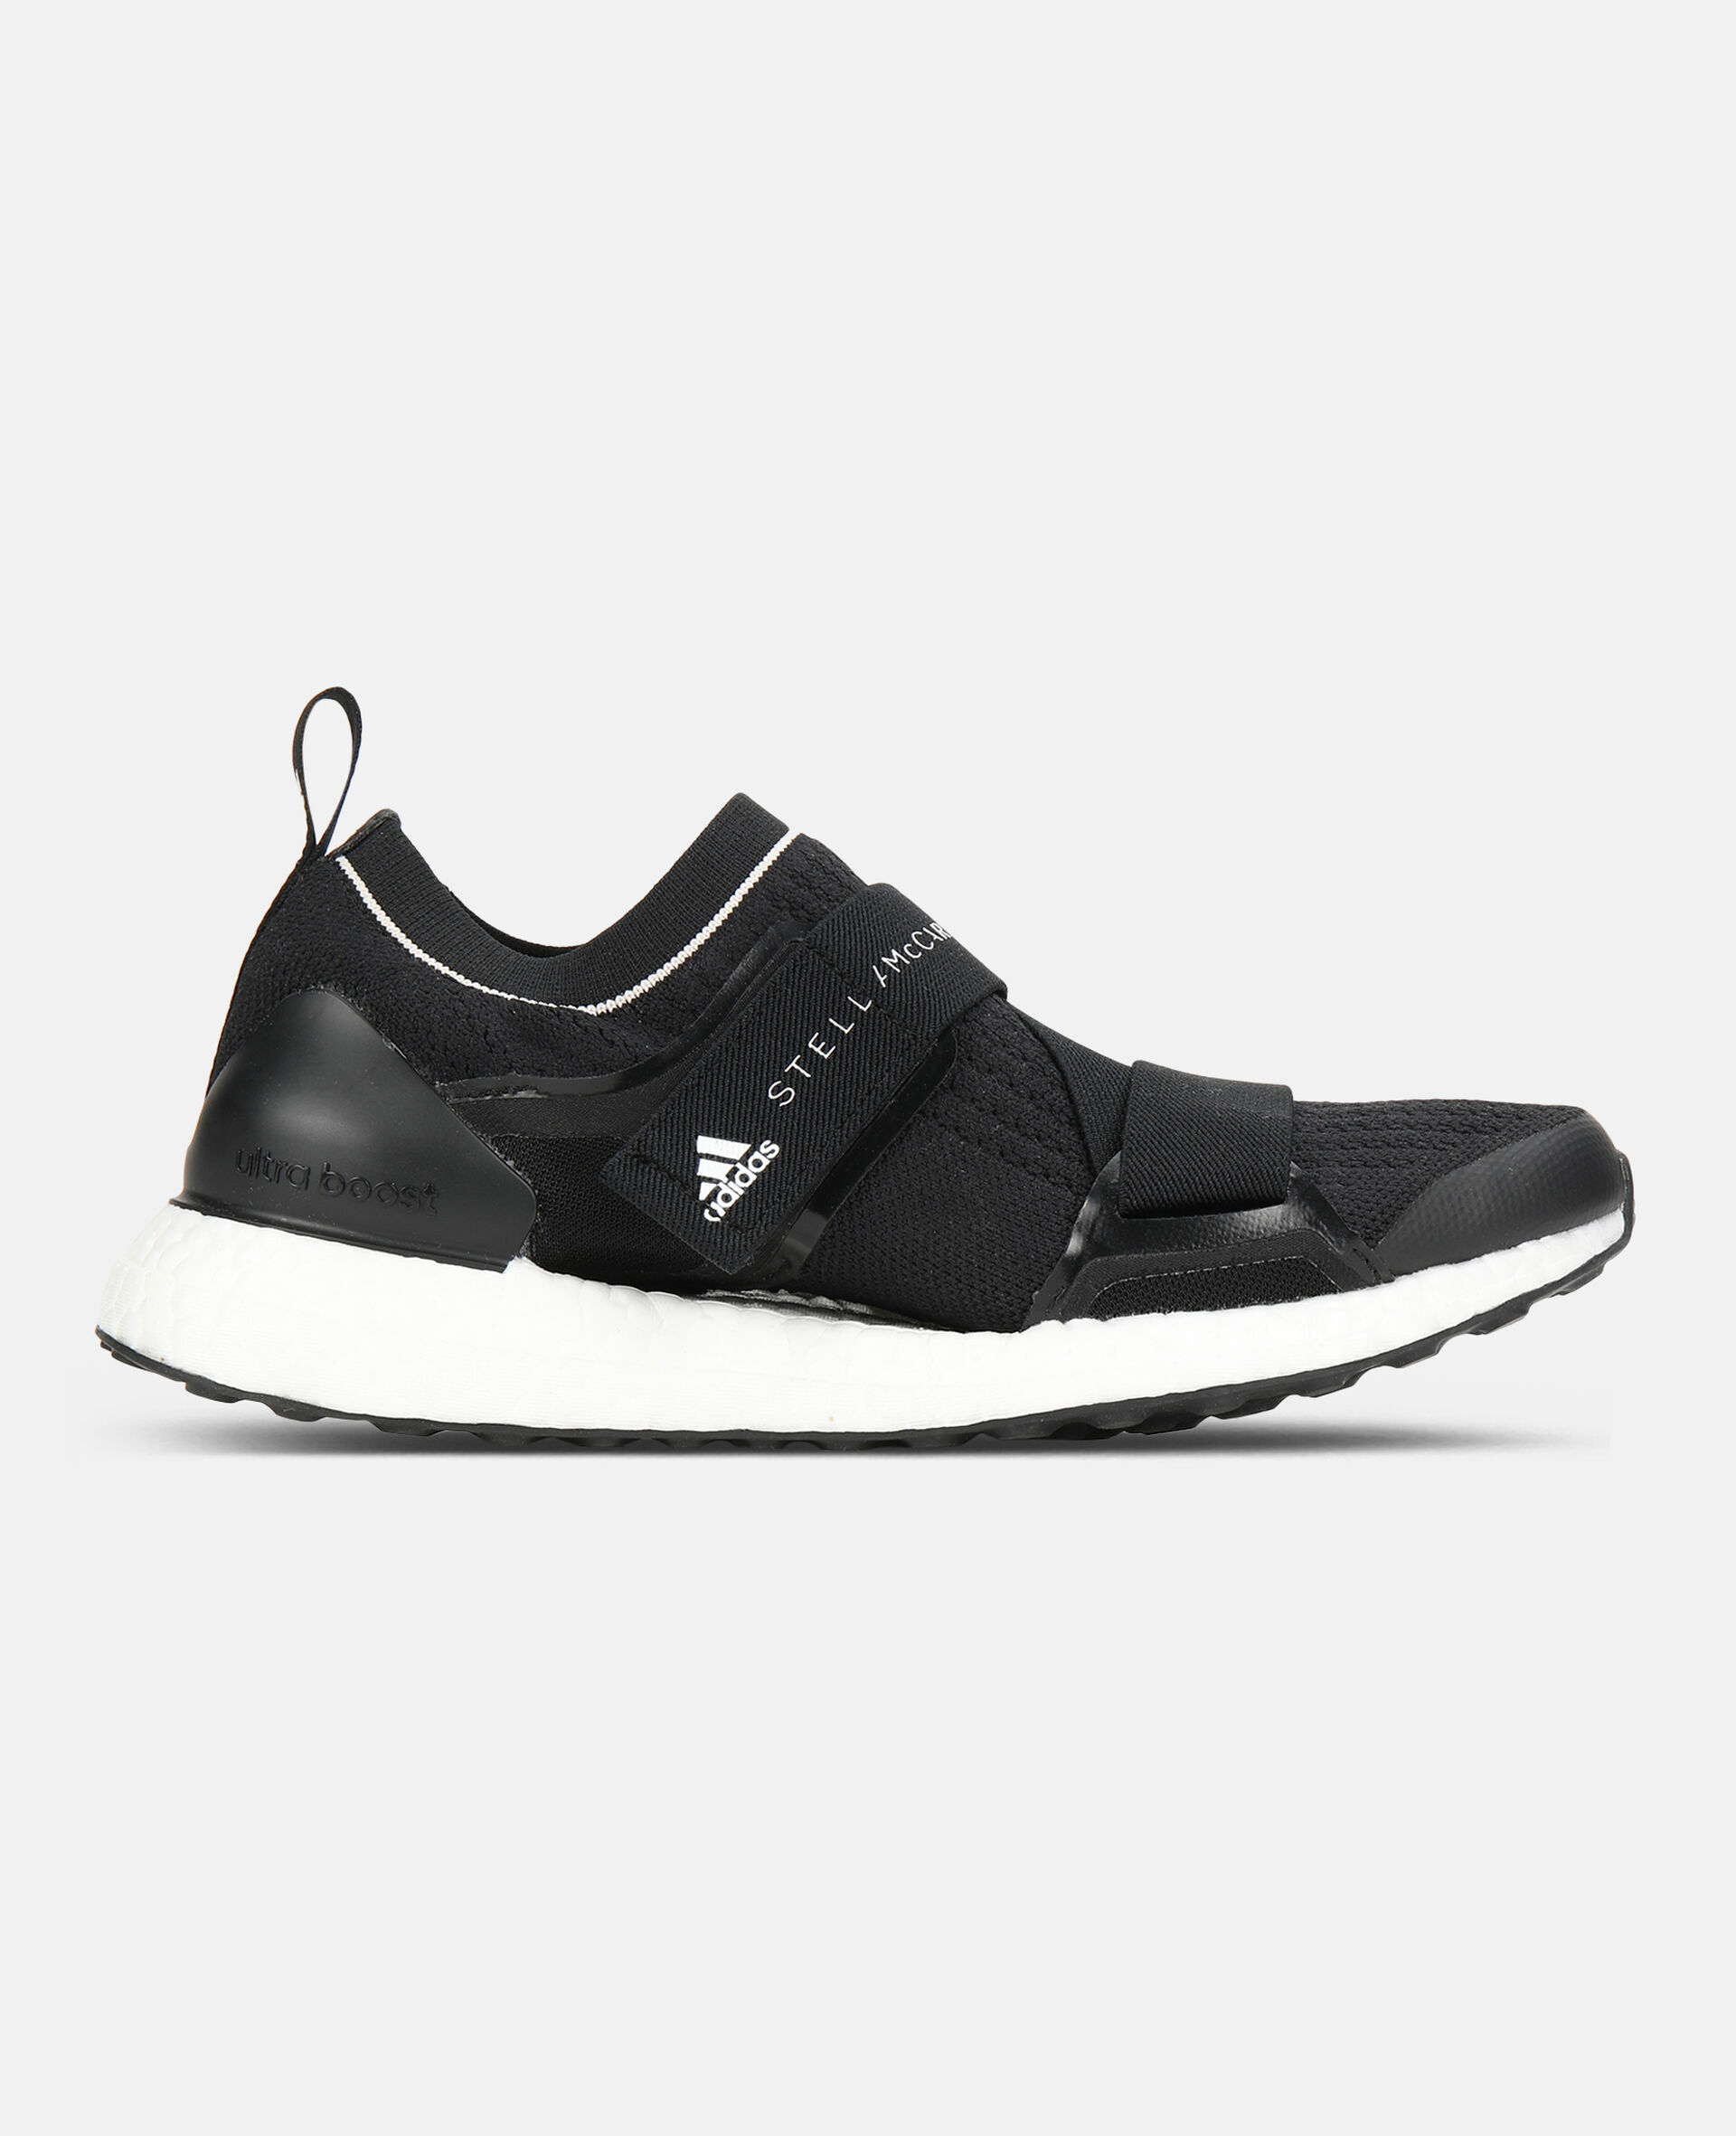 Black Ultraboost X Sneakers-Black-large image number 0